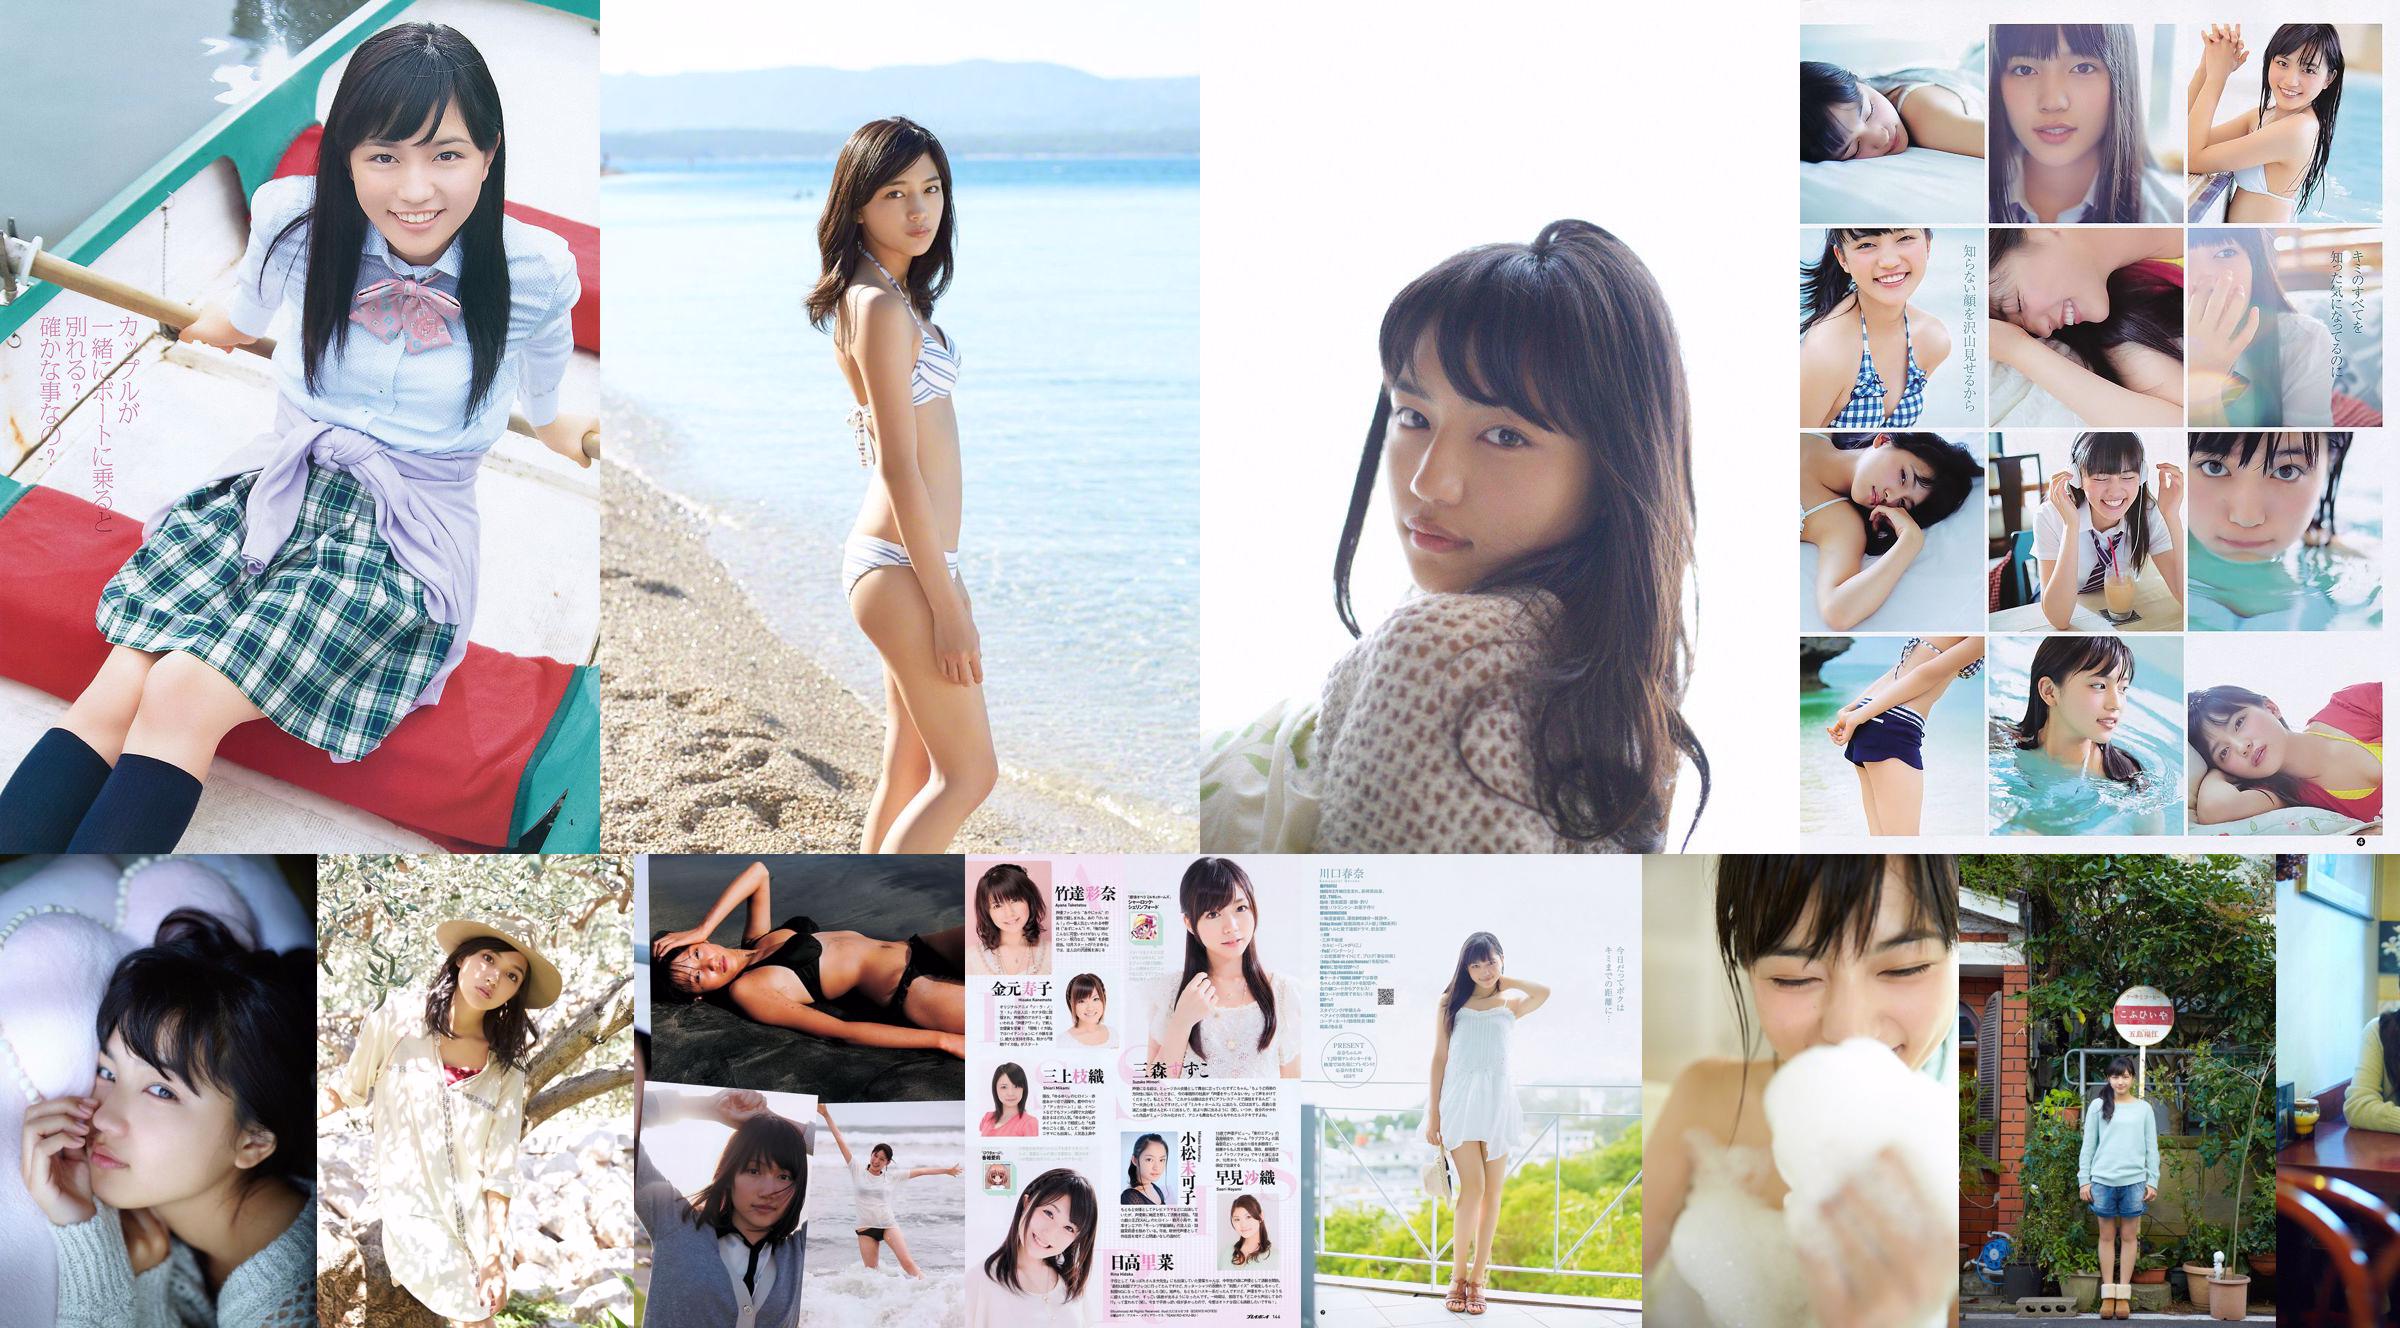 Haruna Kawaguchi Aika Ota Ai Shinozaki [Weekly Young Jump] 2011 No.35 Photograph No.4e1bfc Page 1